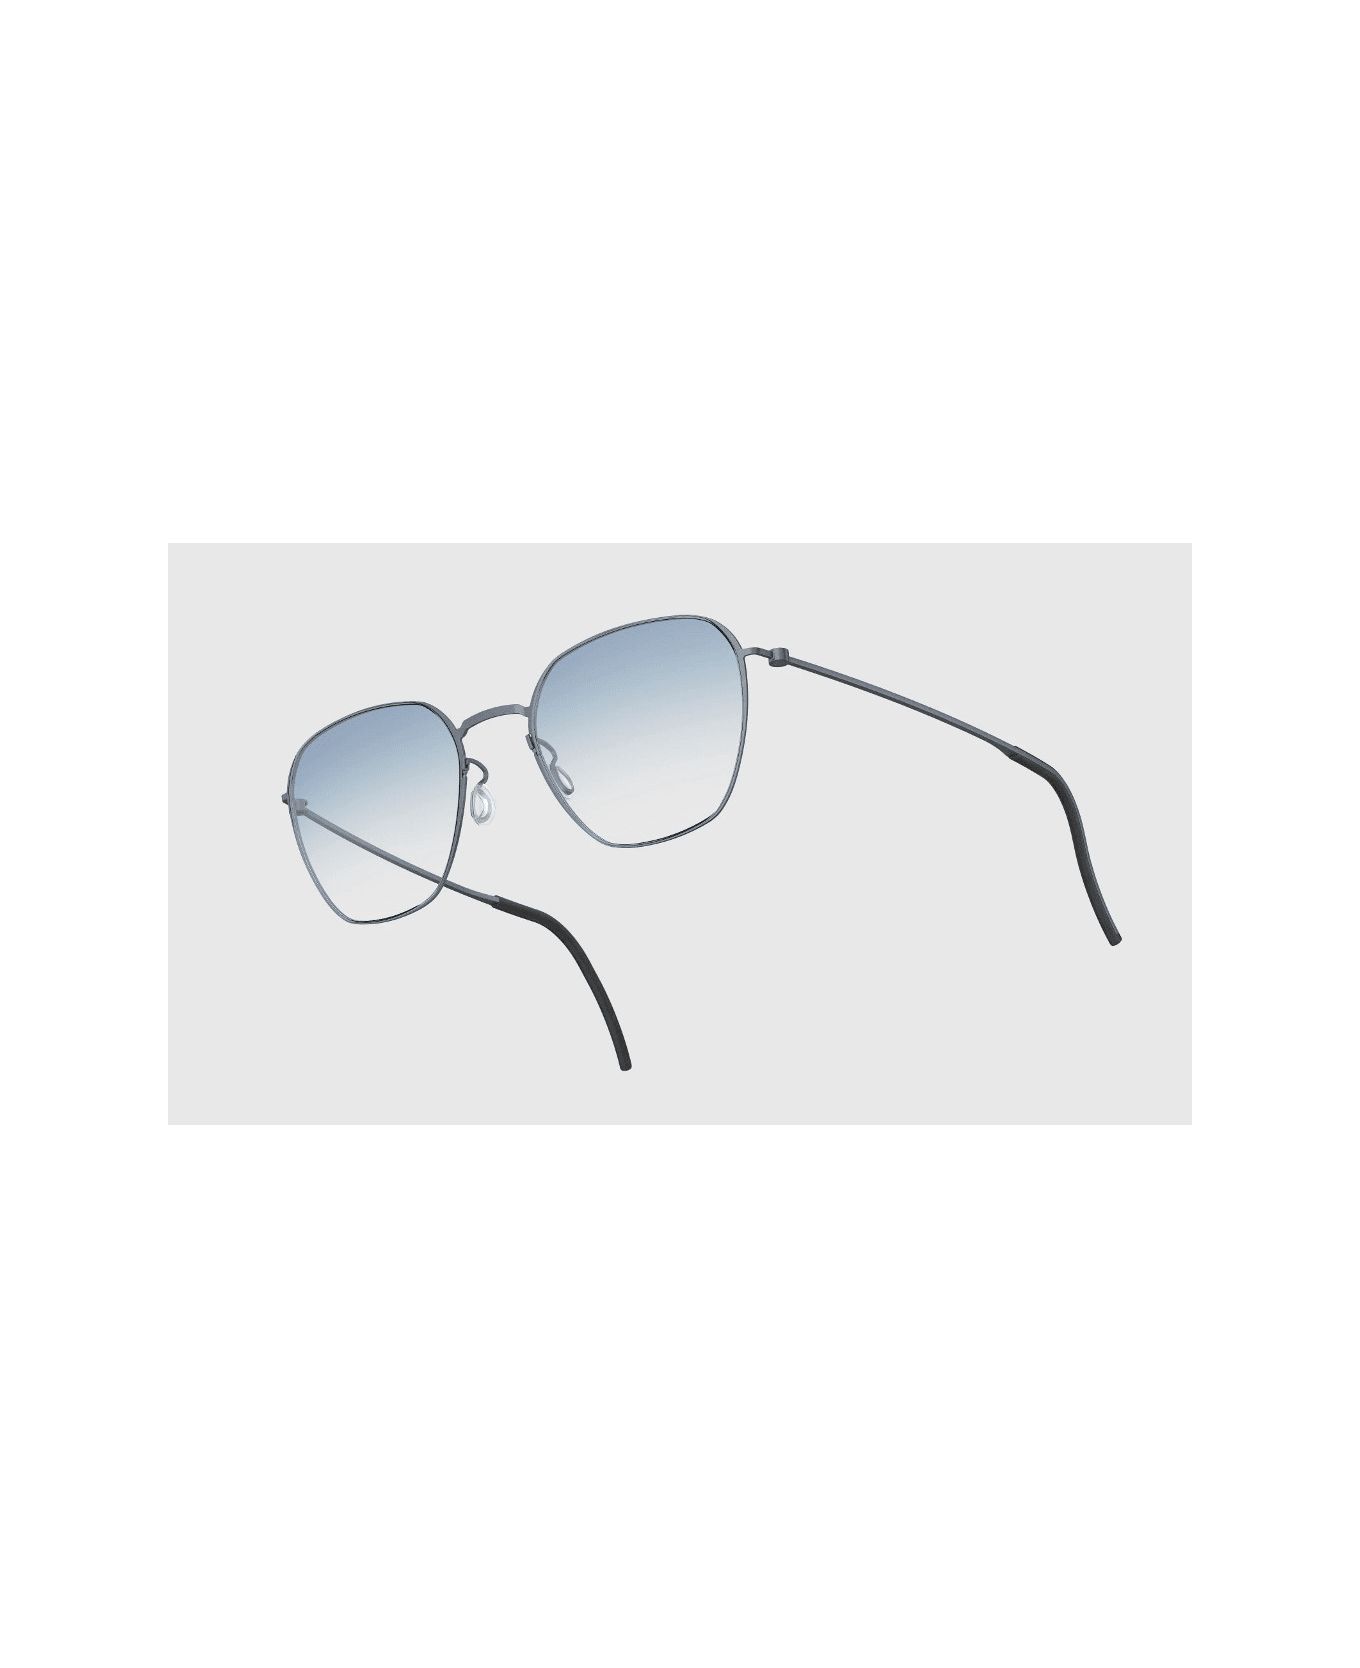 LINDBERG SR 8810 U16 Sunglasses - Grigio lenti azzurre